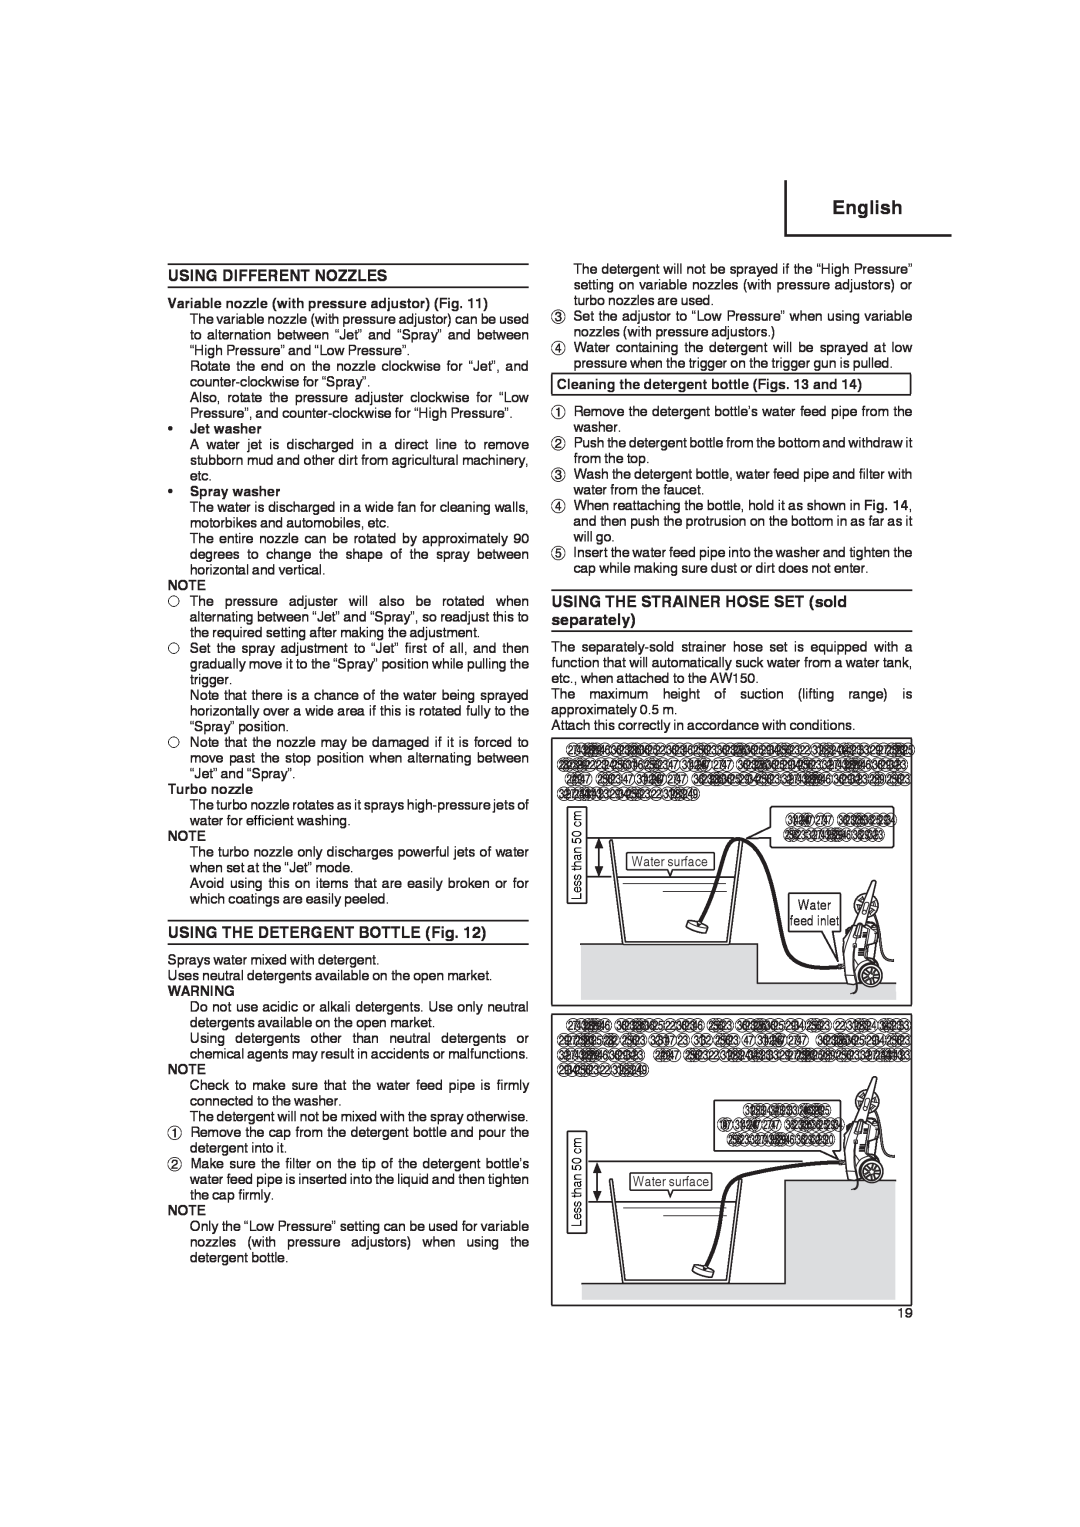 Hitachi Koki USA AW 150 manual Using Different Nozzles, USING THE DETERGENT BOTTLE Fig, English, Jet washer, Spray washer 